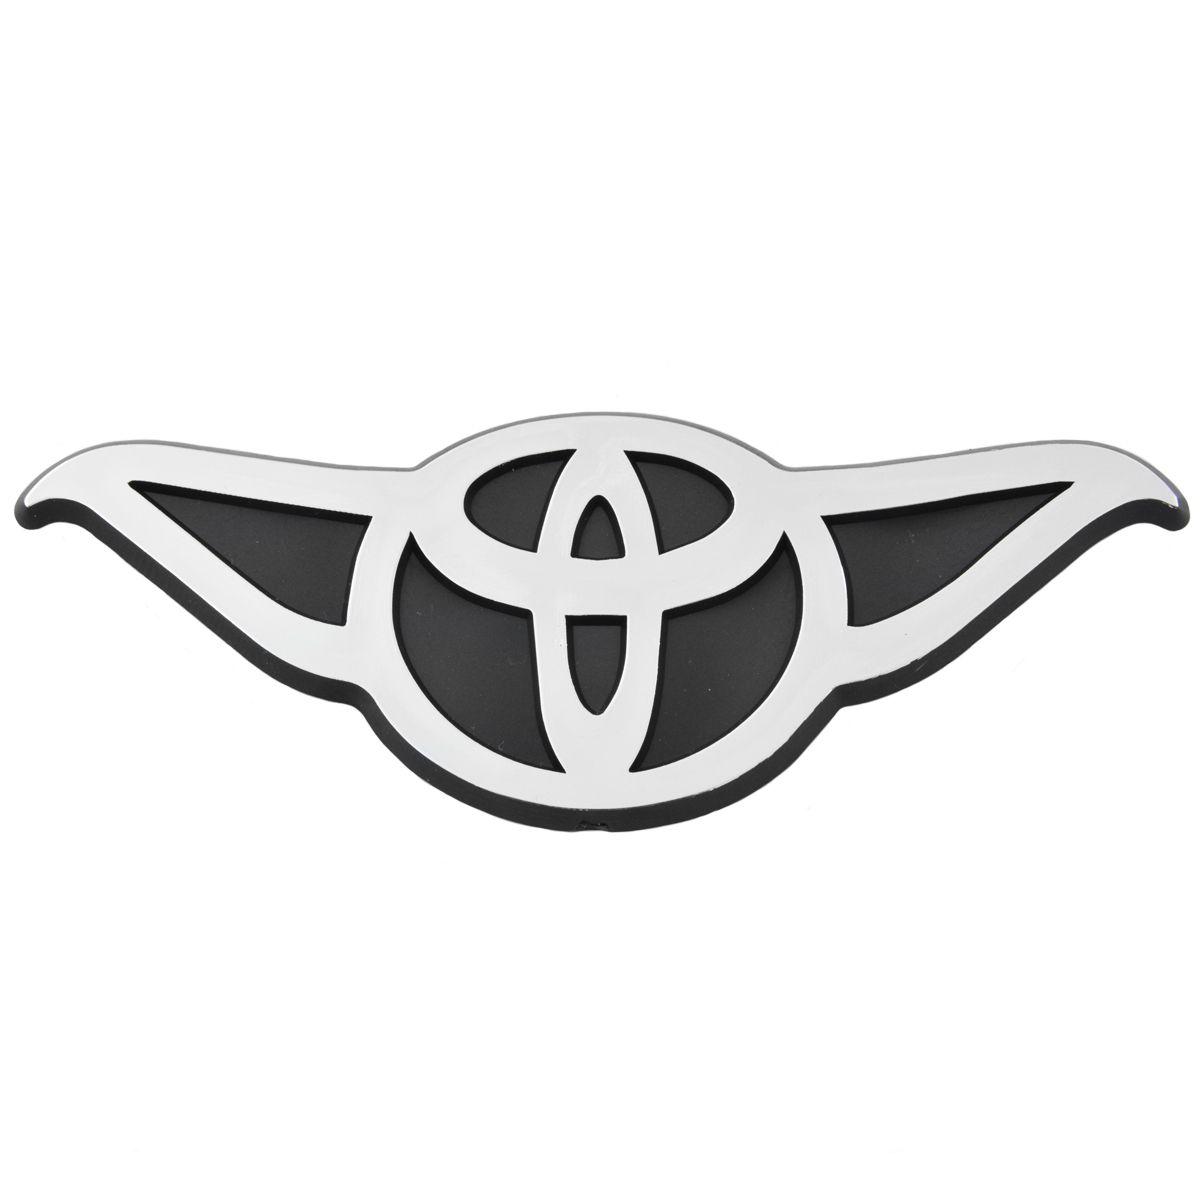 Yoda Logo - Toyoda 5 Chrome Auto Emblem